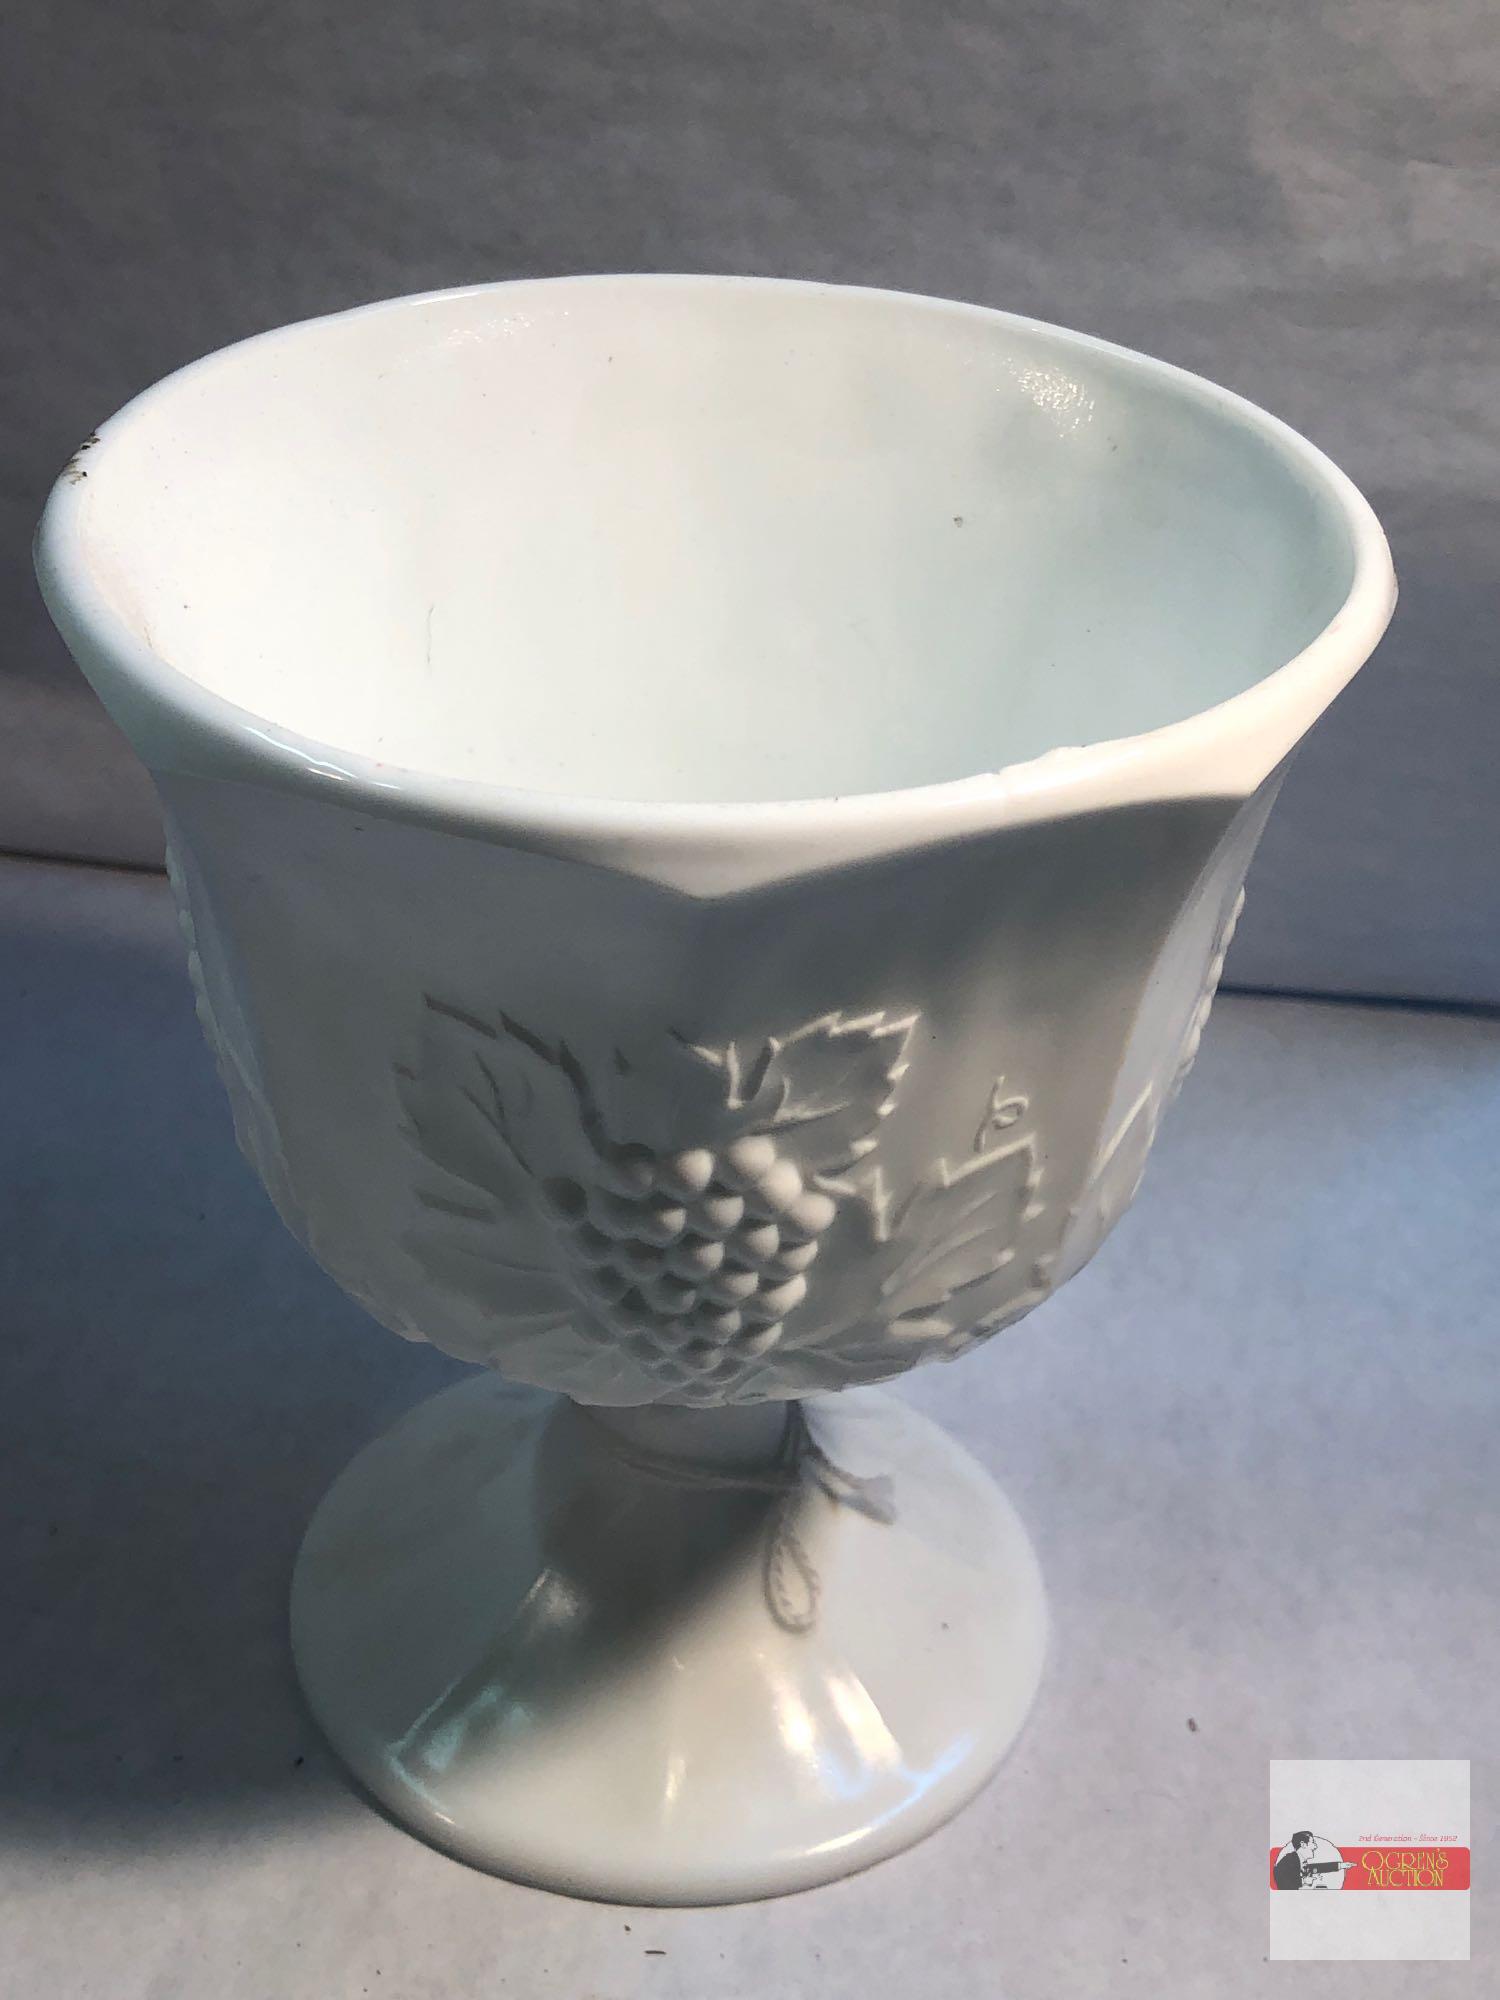 8 items - Vases, bowl and 2 pedestal dessert stems